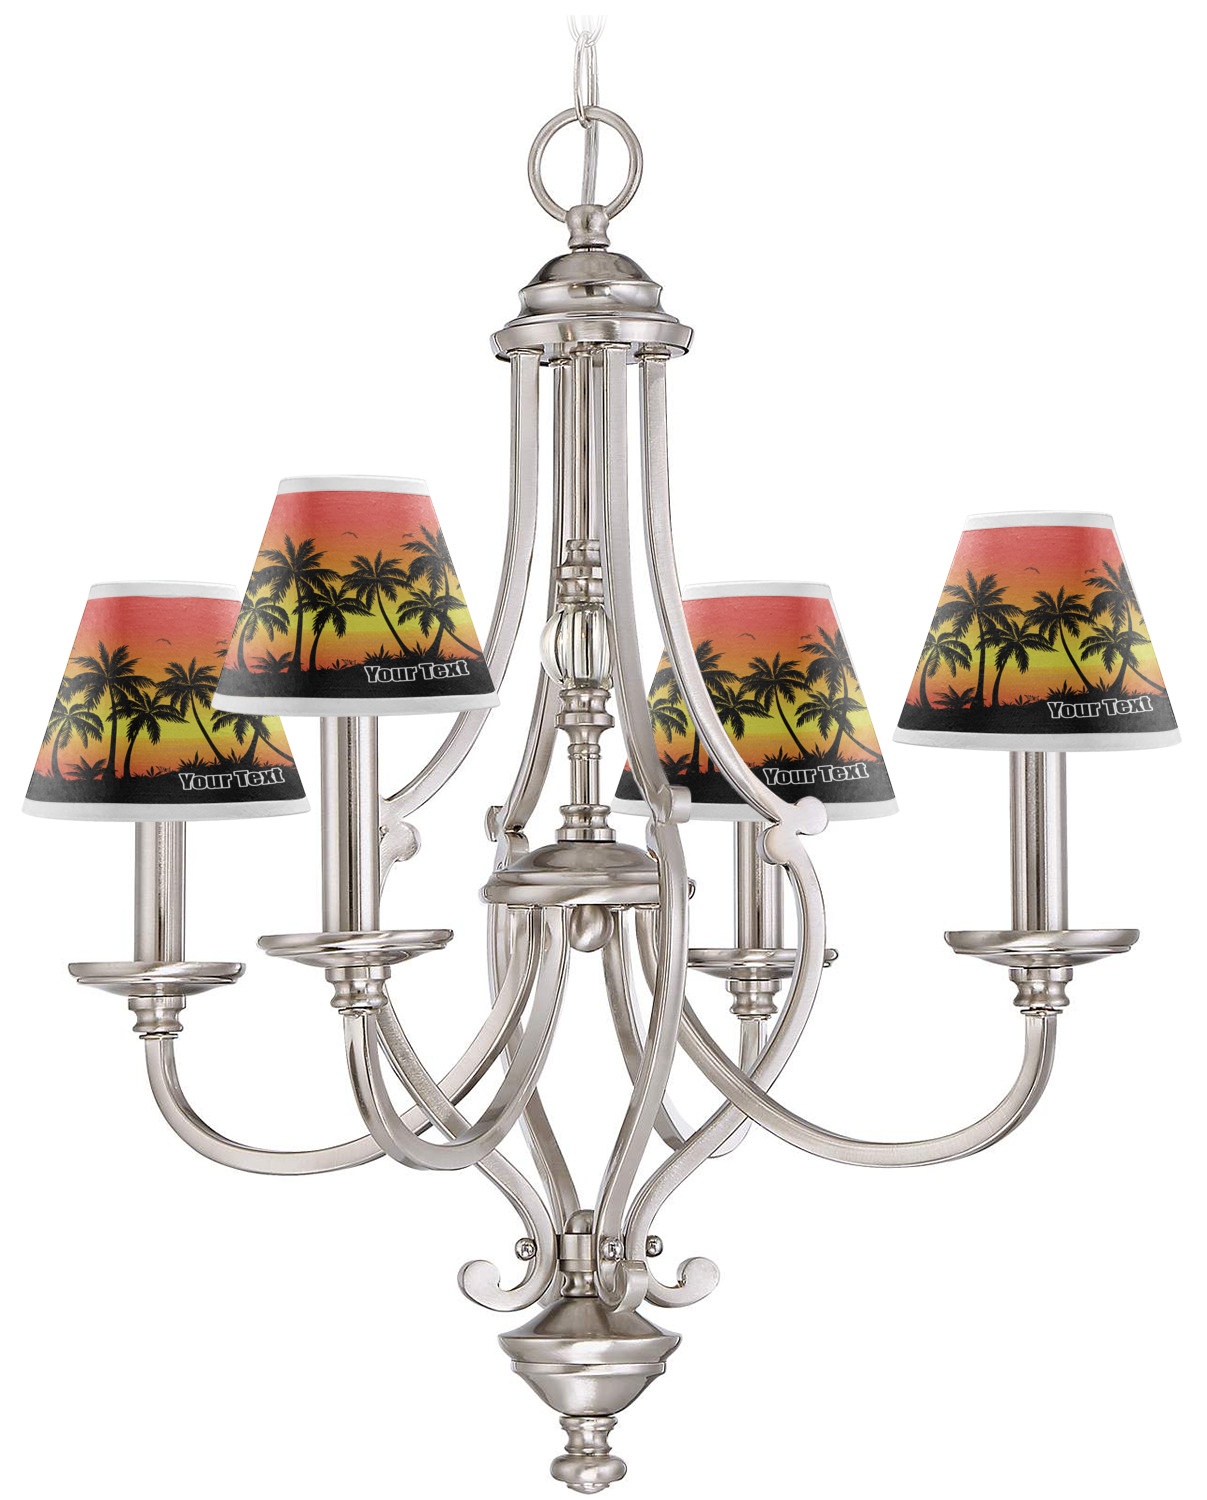 Sunset Lamp : Brass Mutual Sunset Lamp Comany Art Deco Pedestal Table